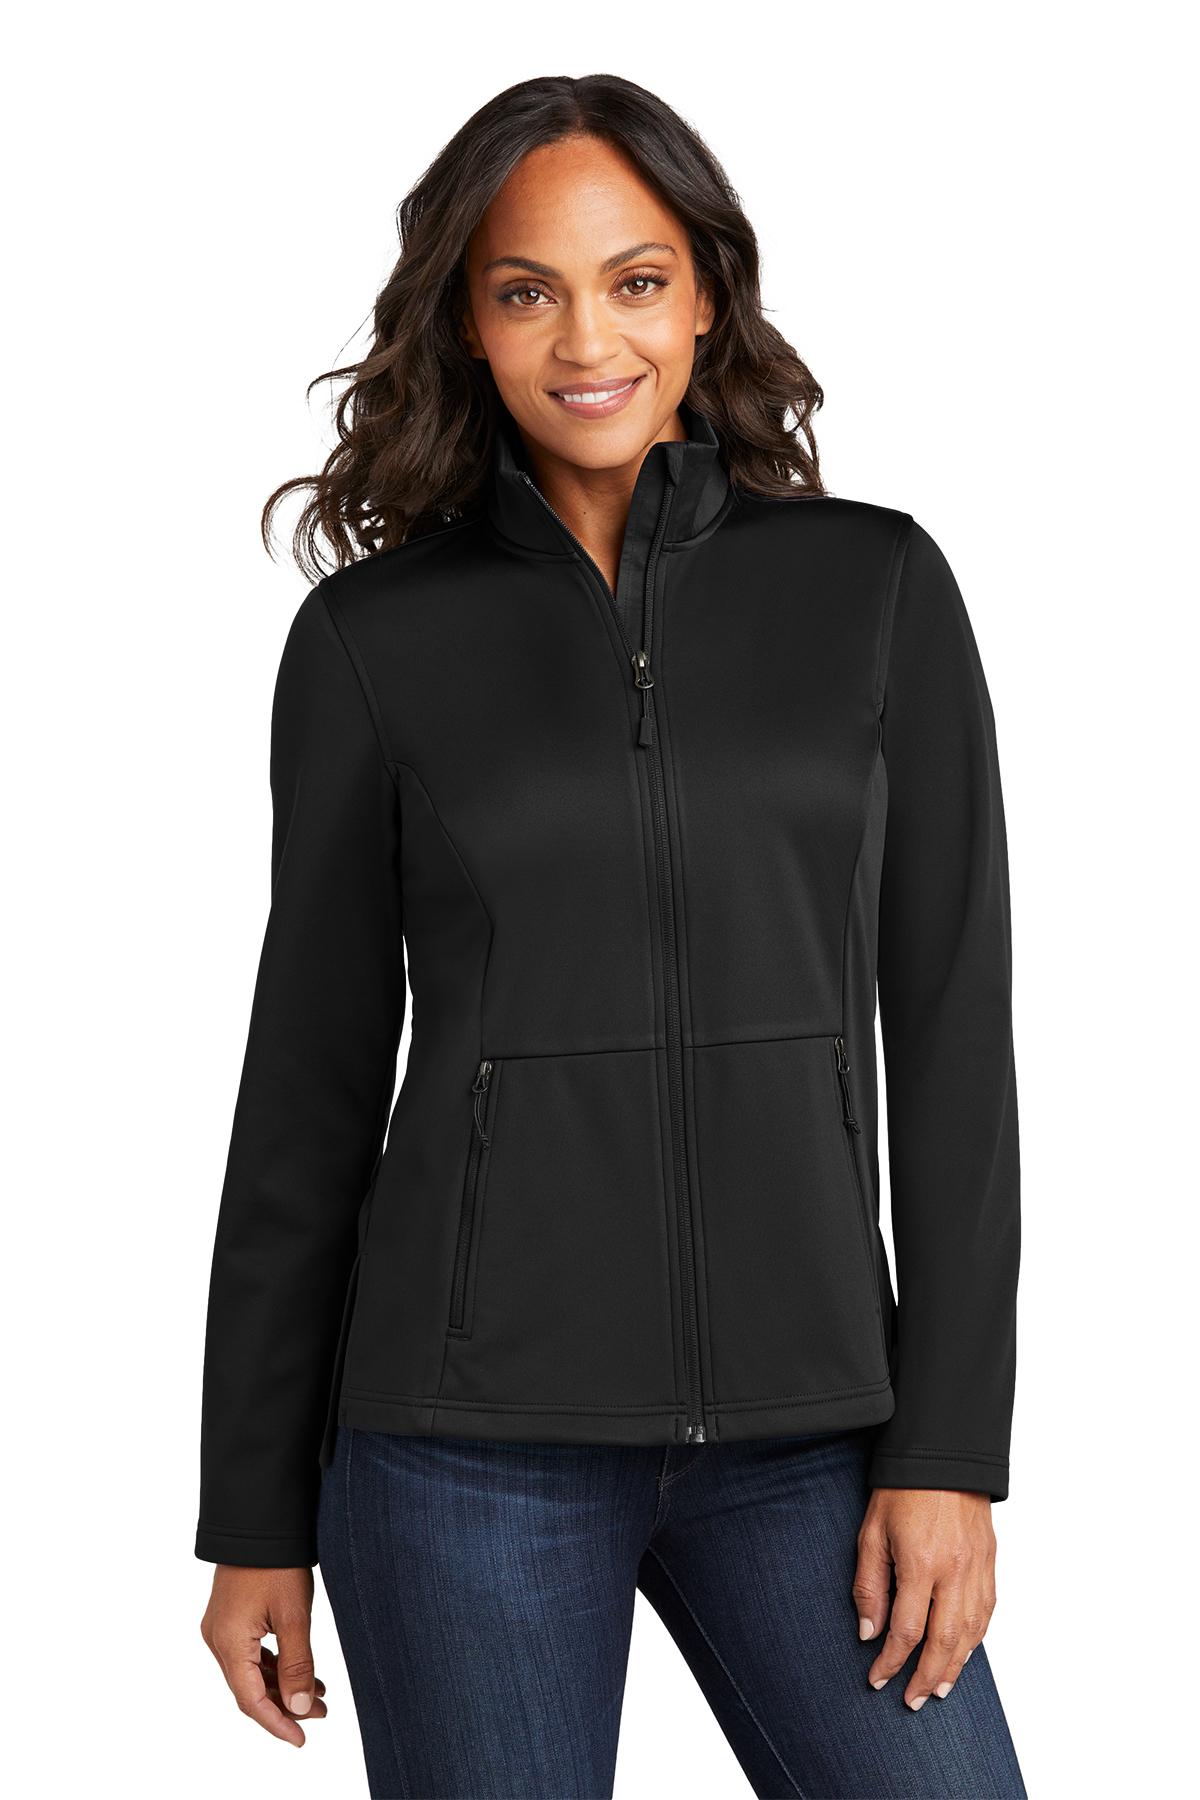 Authority SanMar | Jacket Flexshell Product Ladies | Port